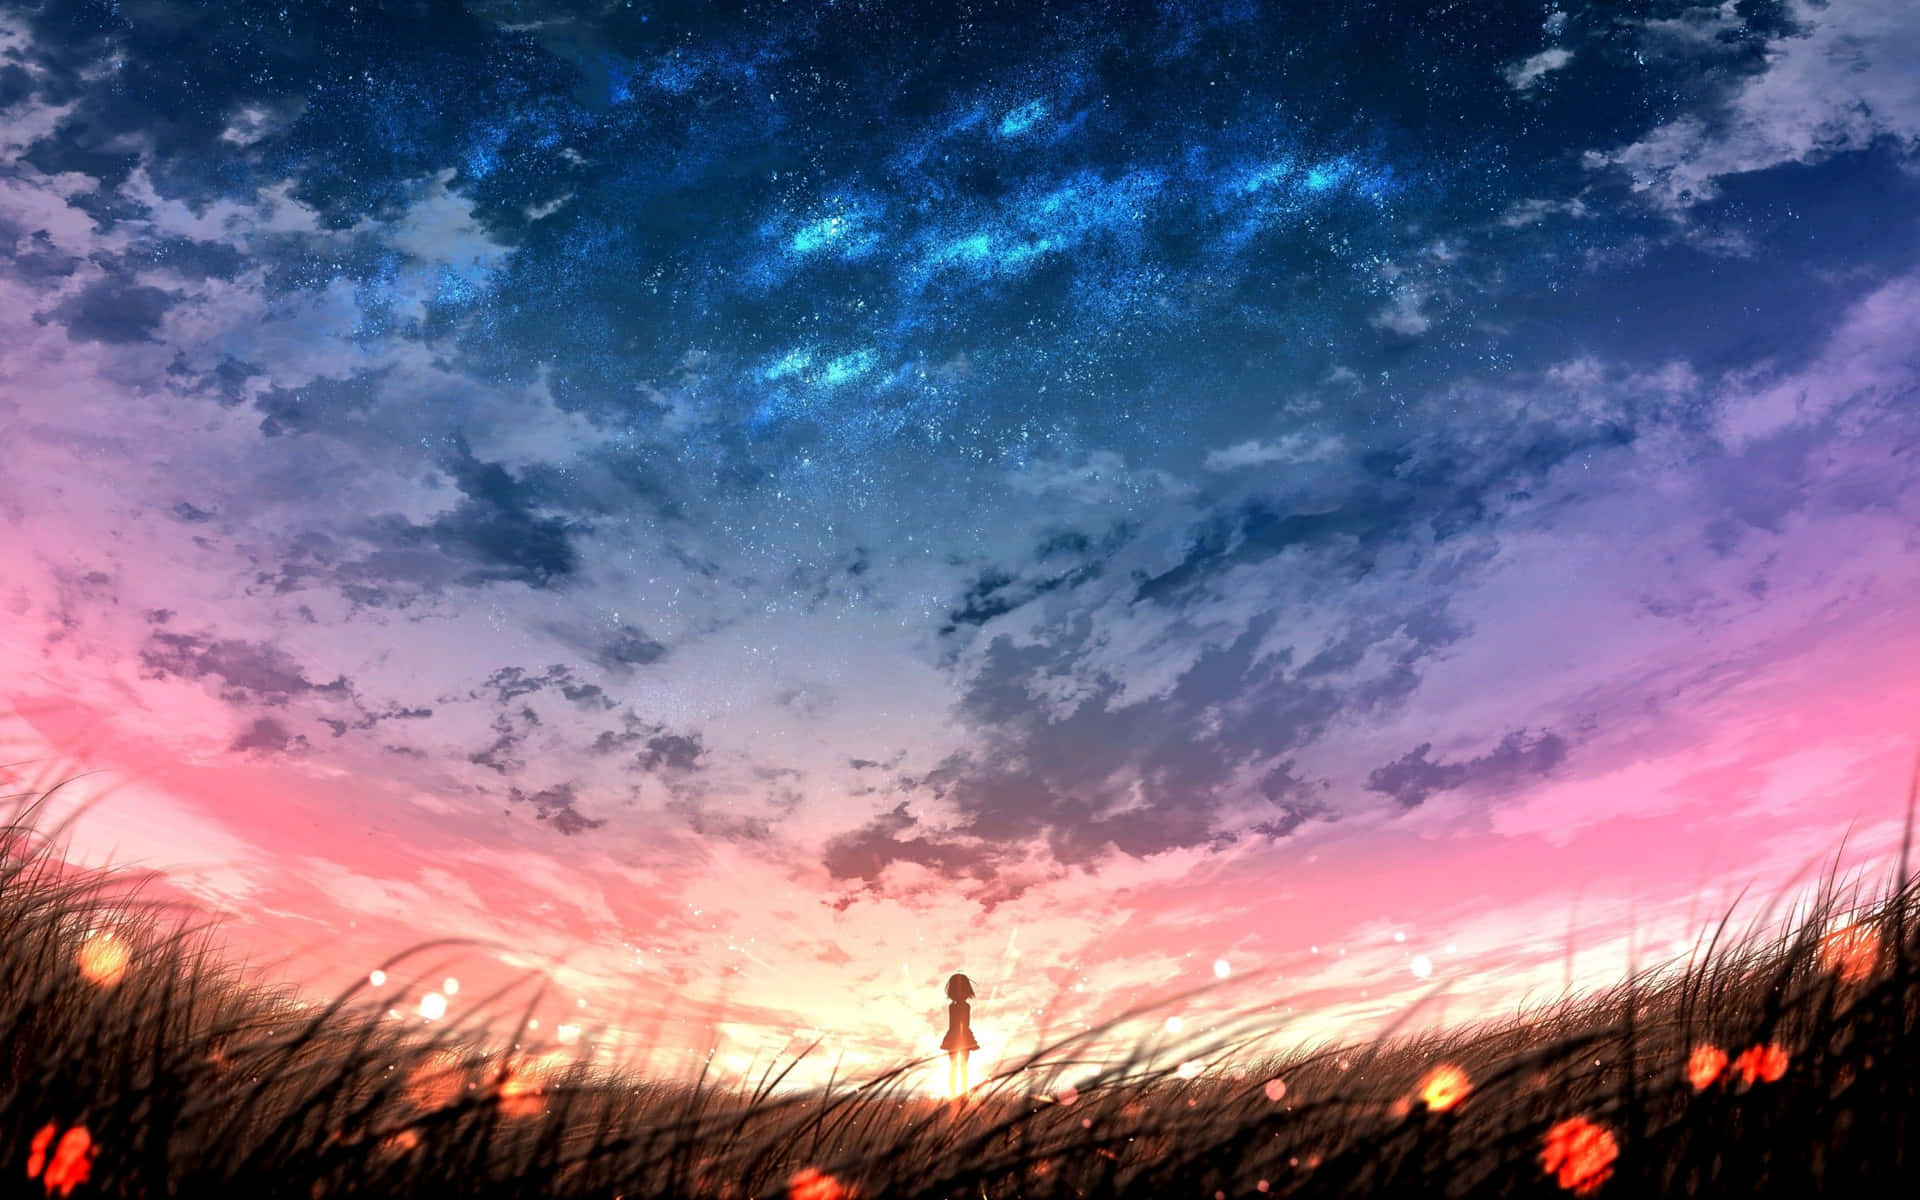 “Colorful Anime Fantasy Land”